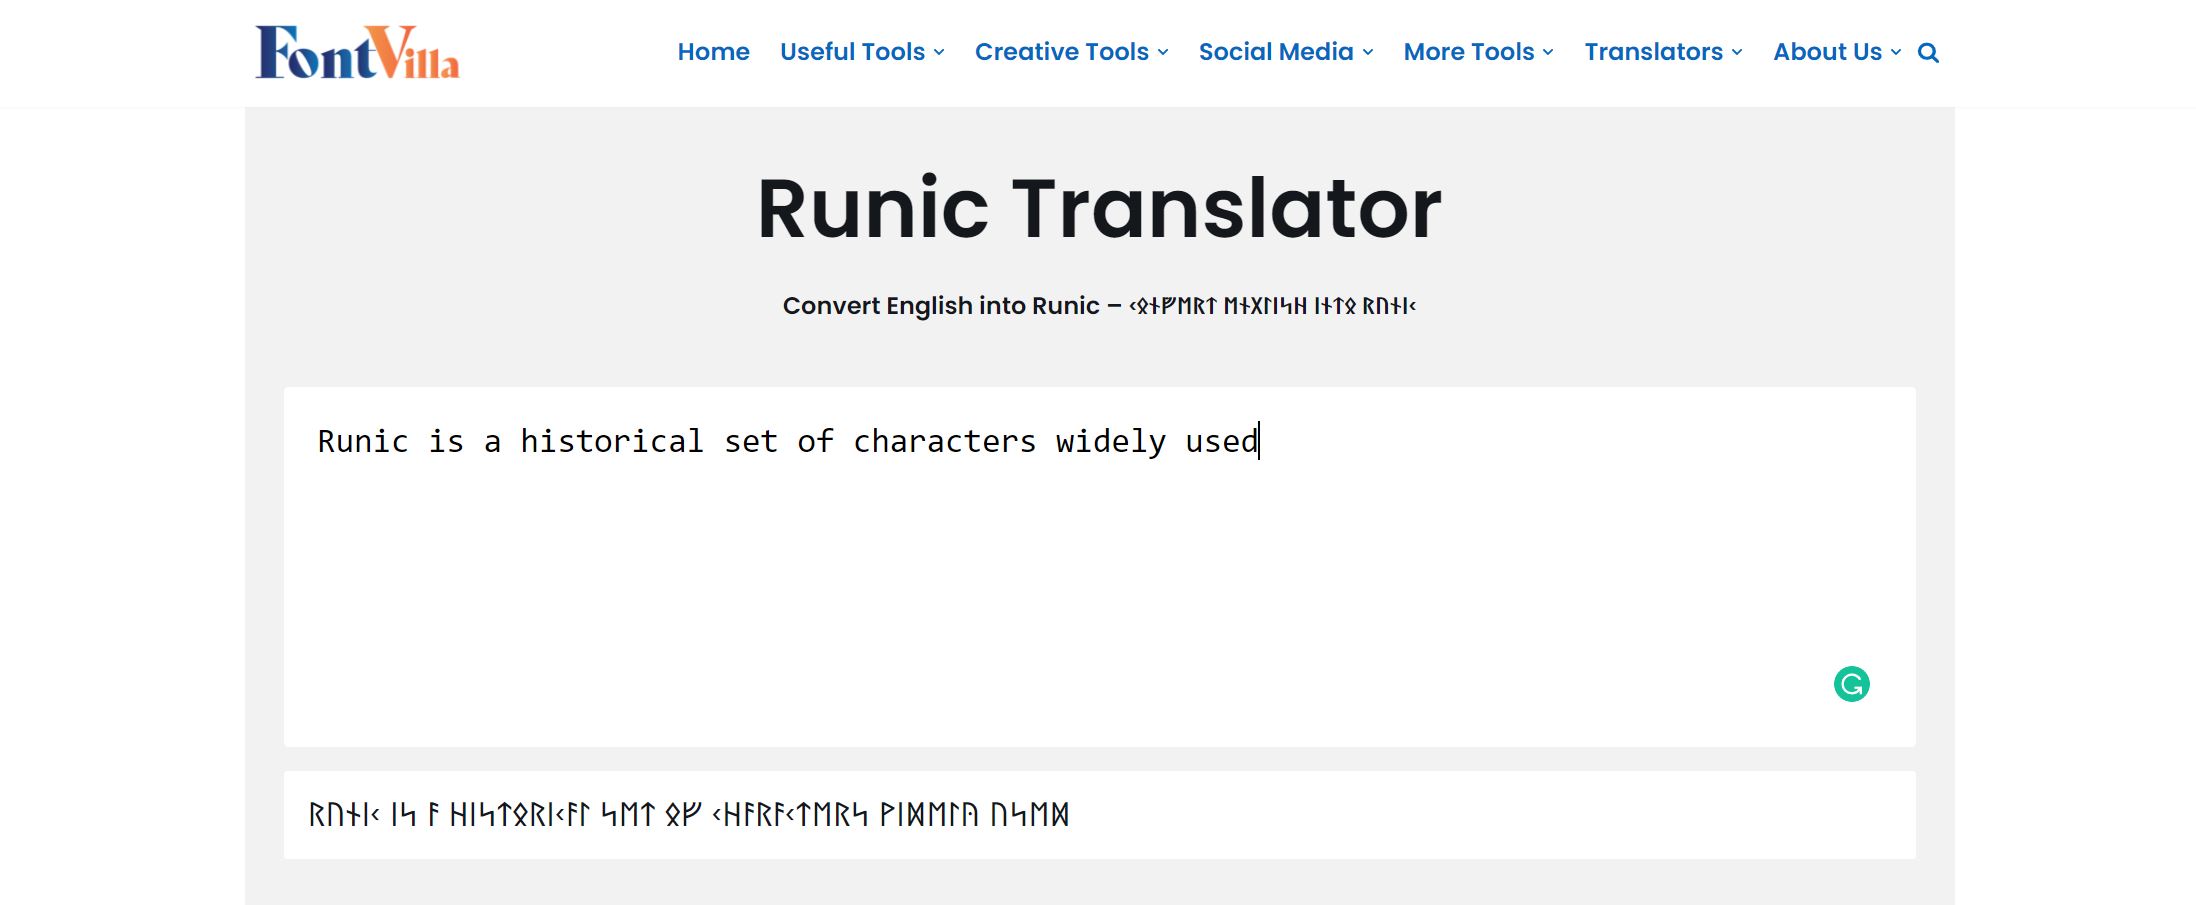 Runic Translator